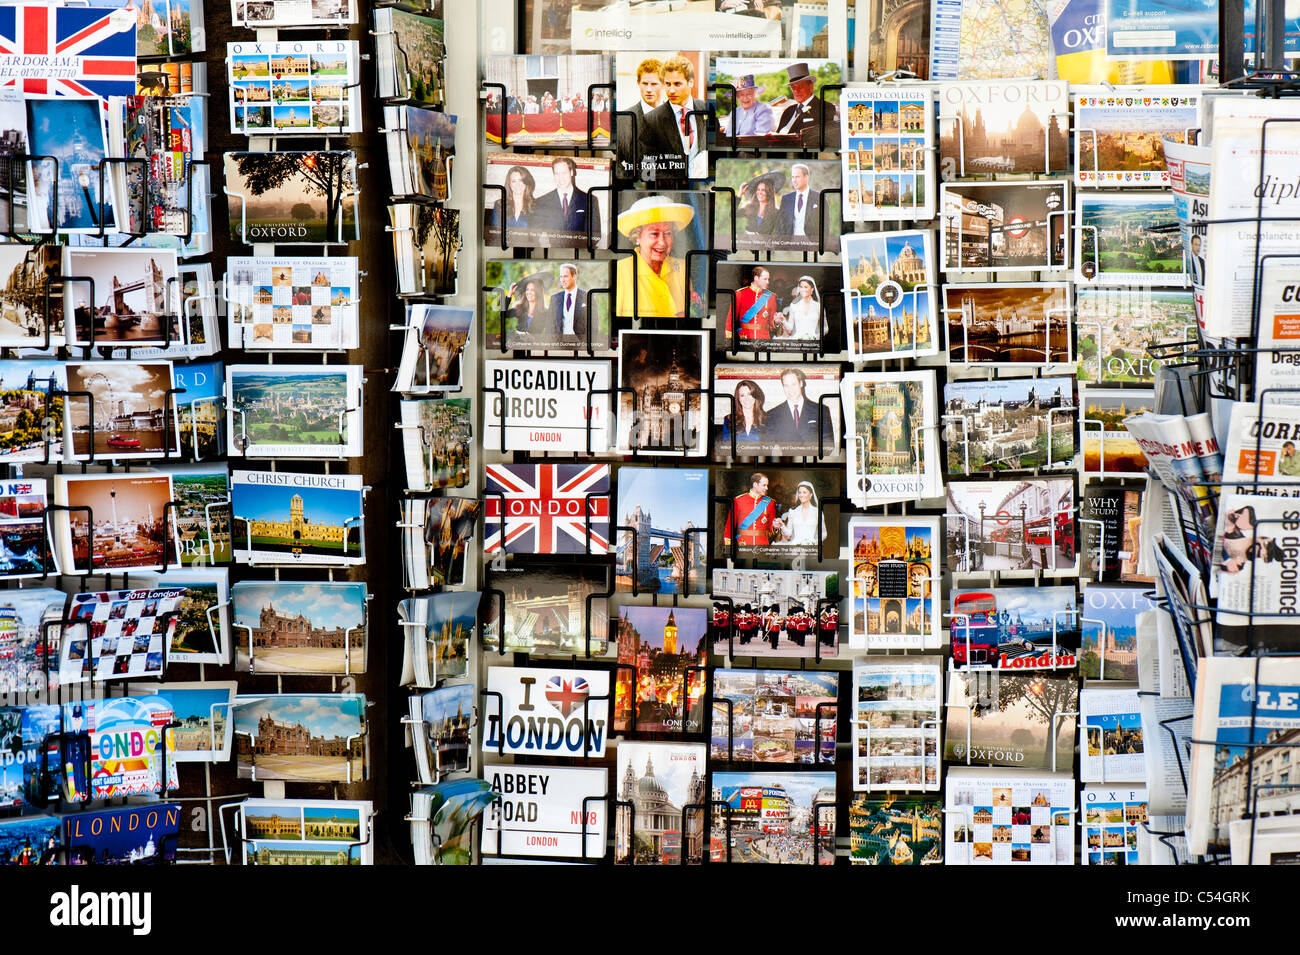 Postcards on sale, Oxford, Oxfordshire, United Kingdom Stock Photo